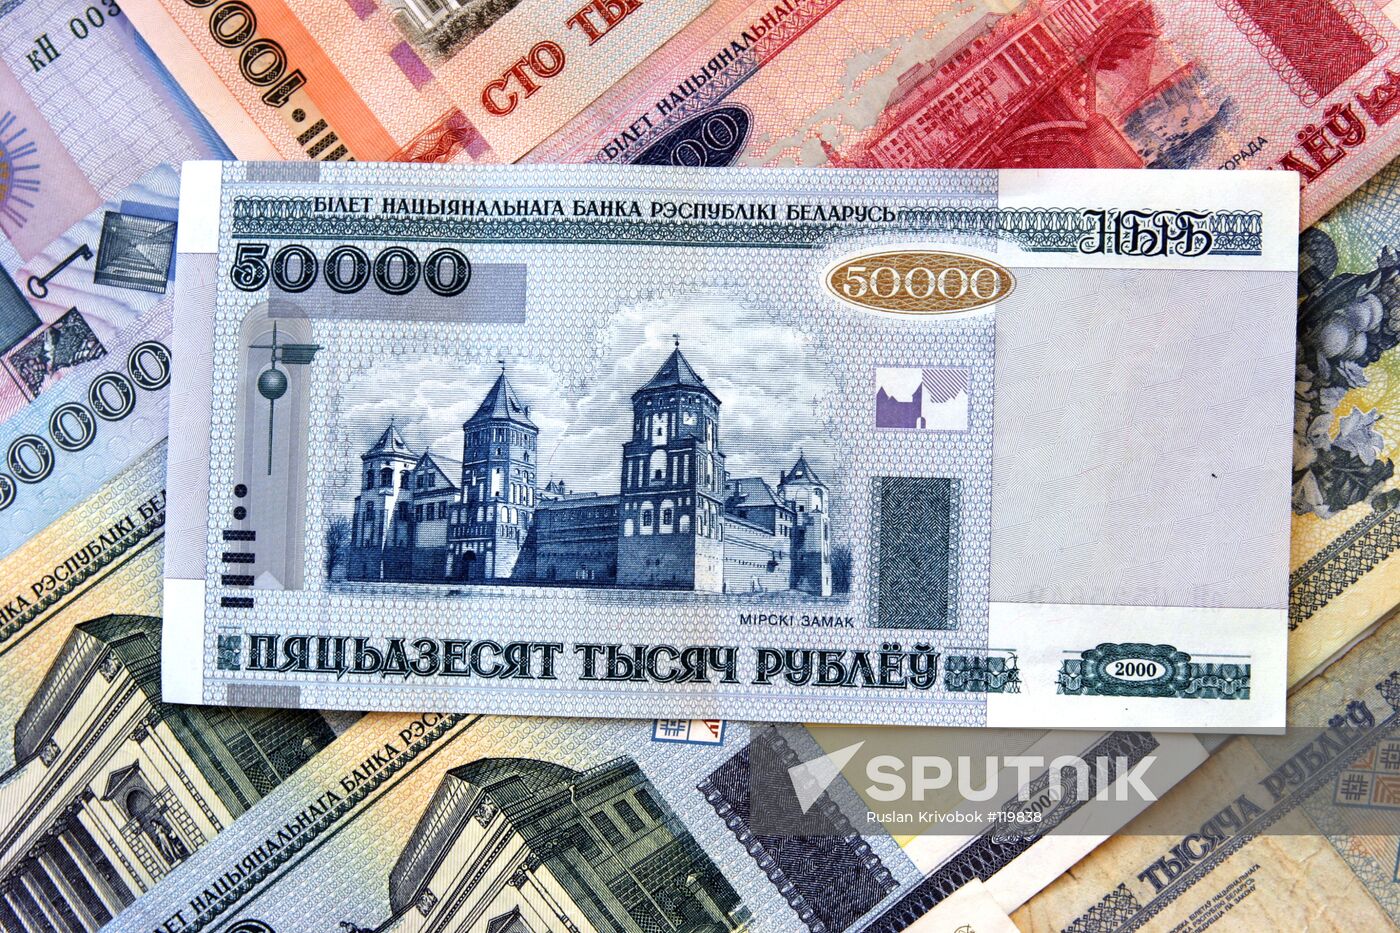 Belarussian monetary units